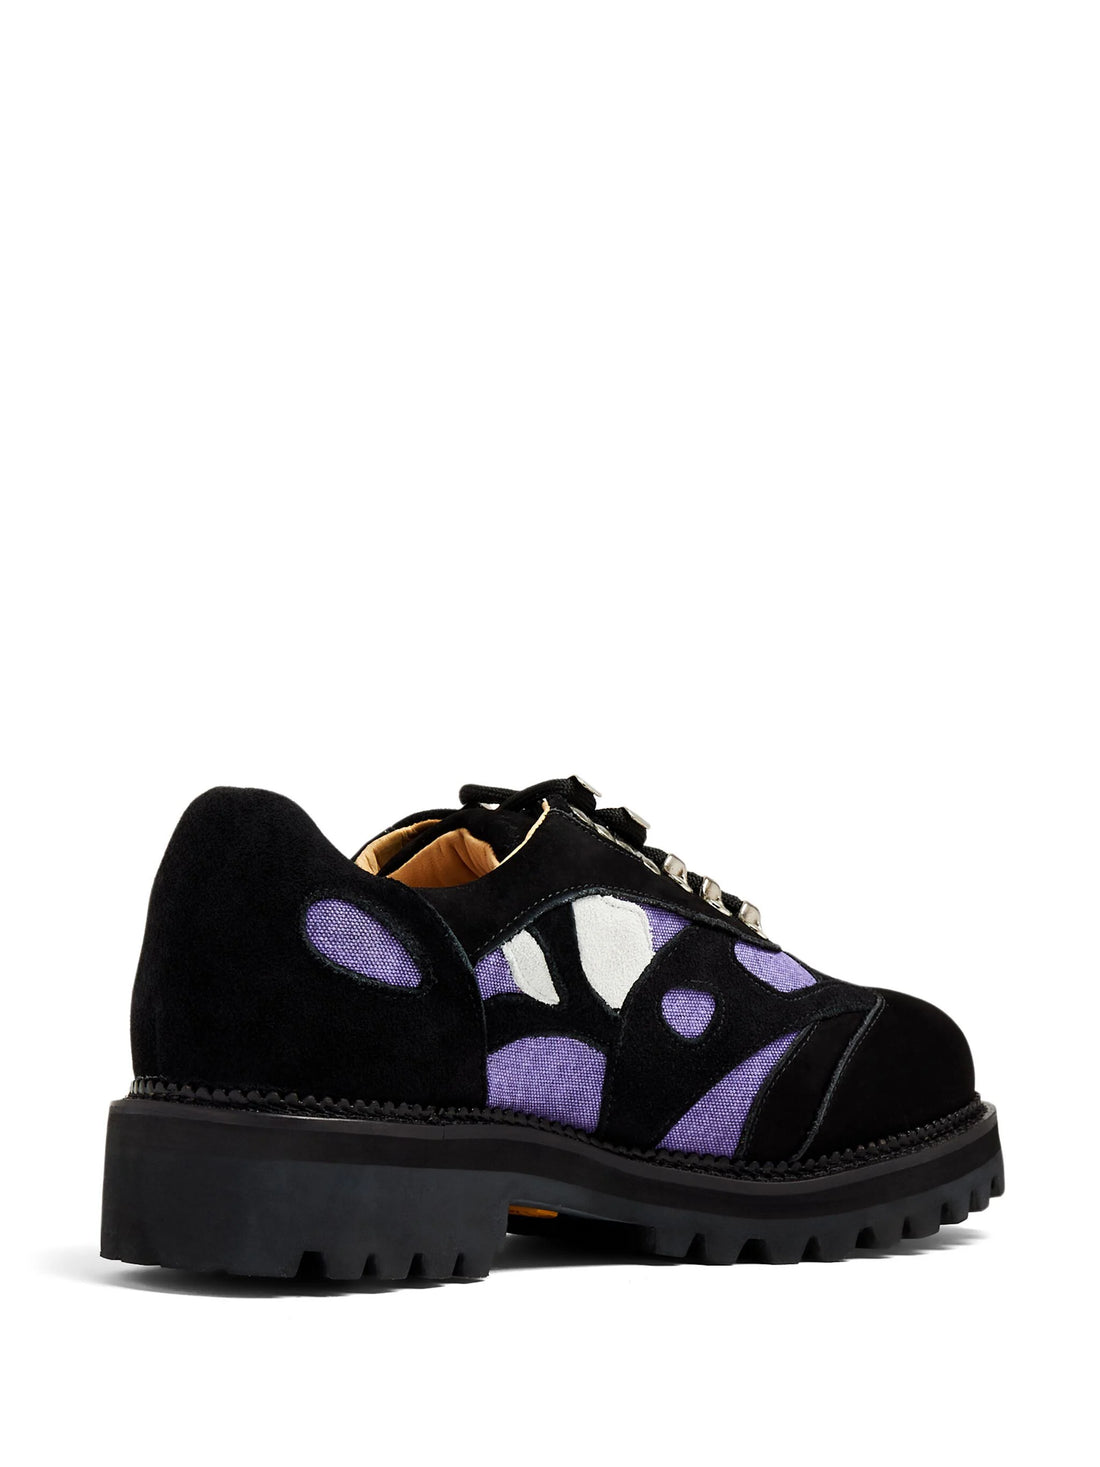 KIDSUPER Panelled Suede Lace-Up Sneakers Black/Multi - MAISONDEFASHION.COM